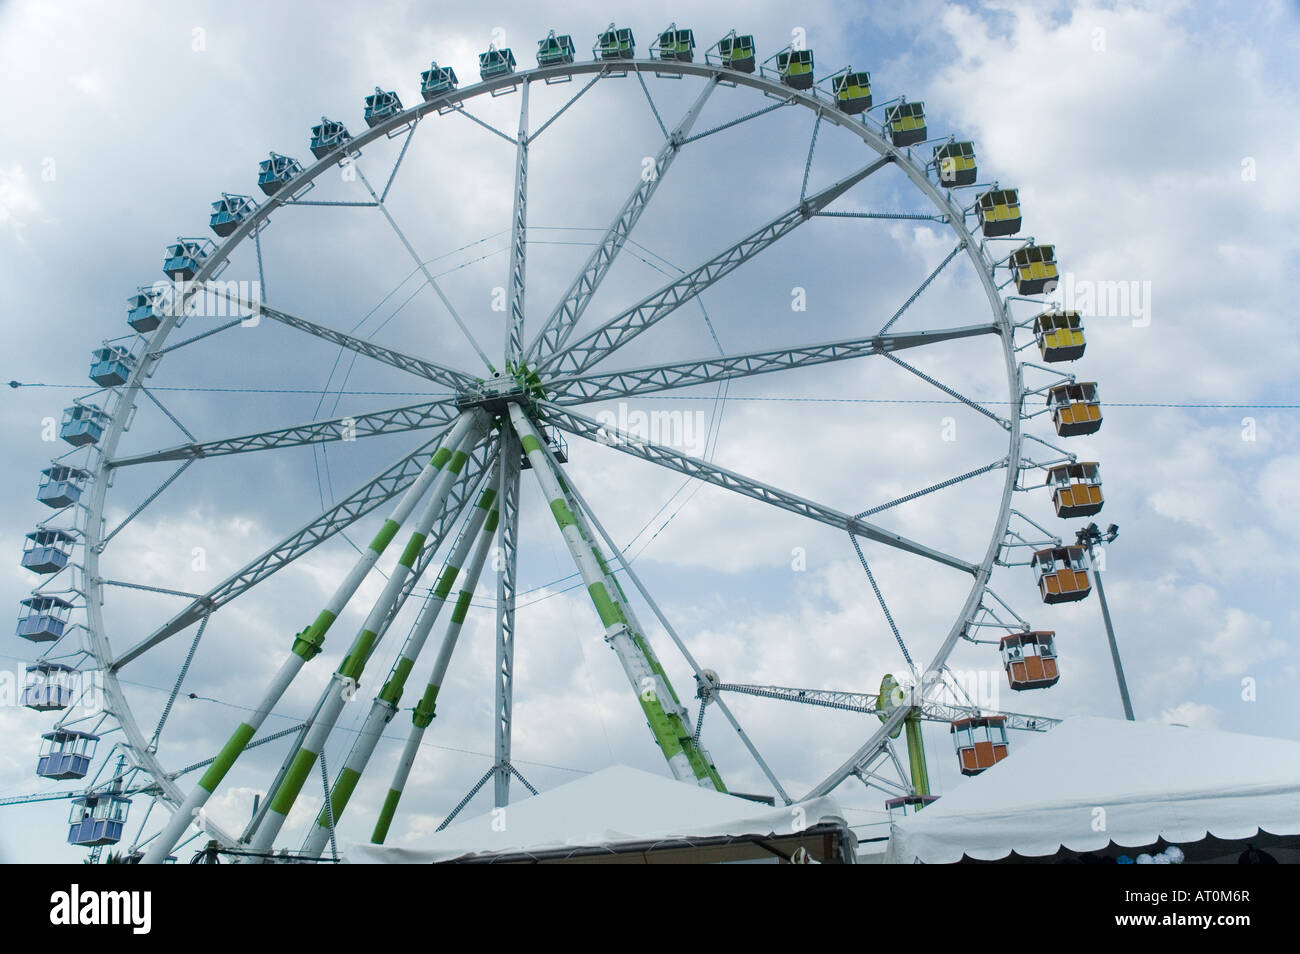 Ferris wheel in the Forum parkduring de Andalusia celebration, Barcelona, Catalonia, Spain Stock Photo